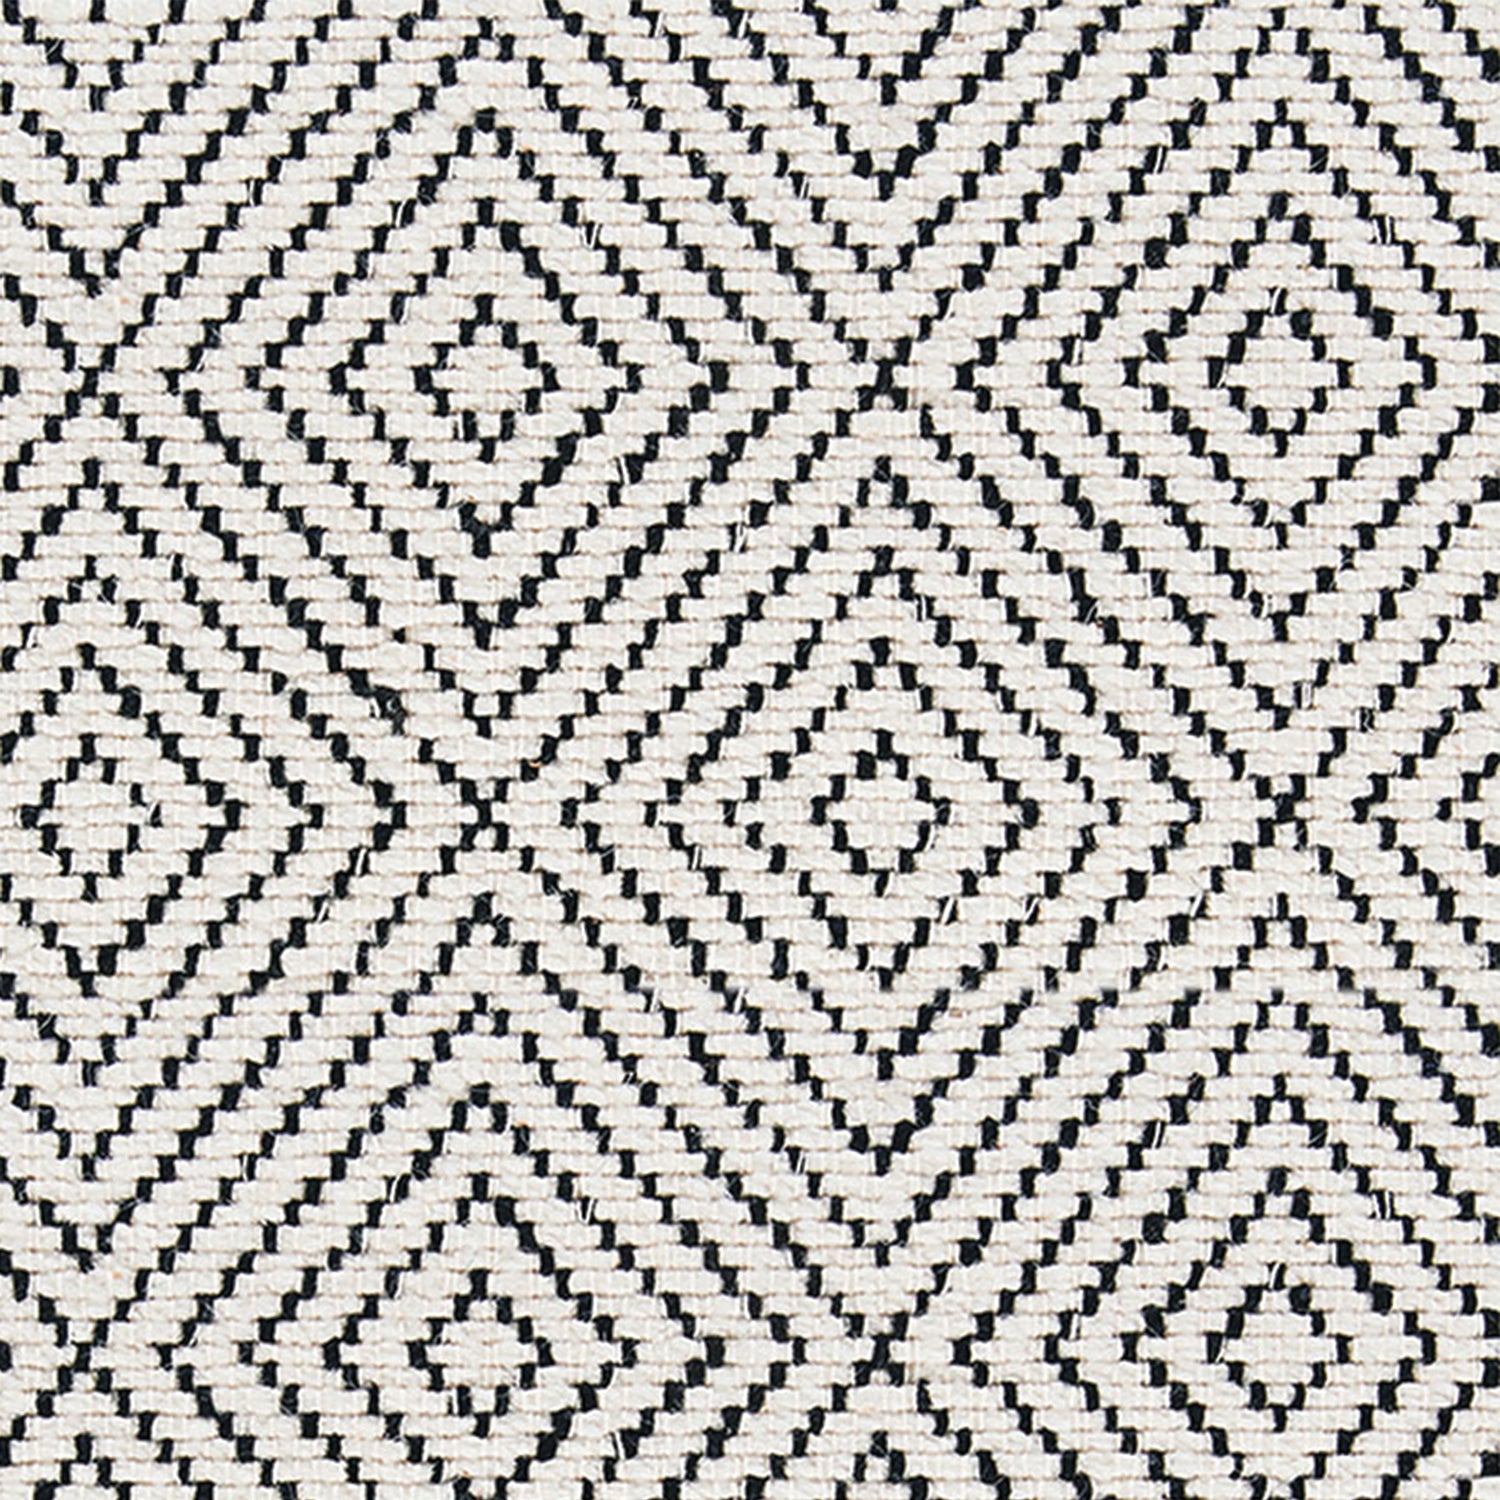 Wool broadloom carpet swatch in a graduated diamond print in onyx on a cream field.